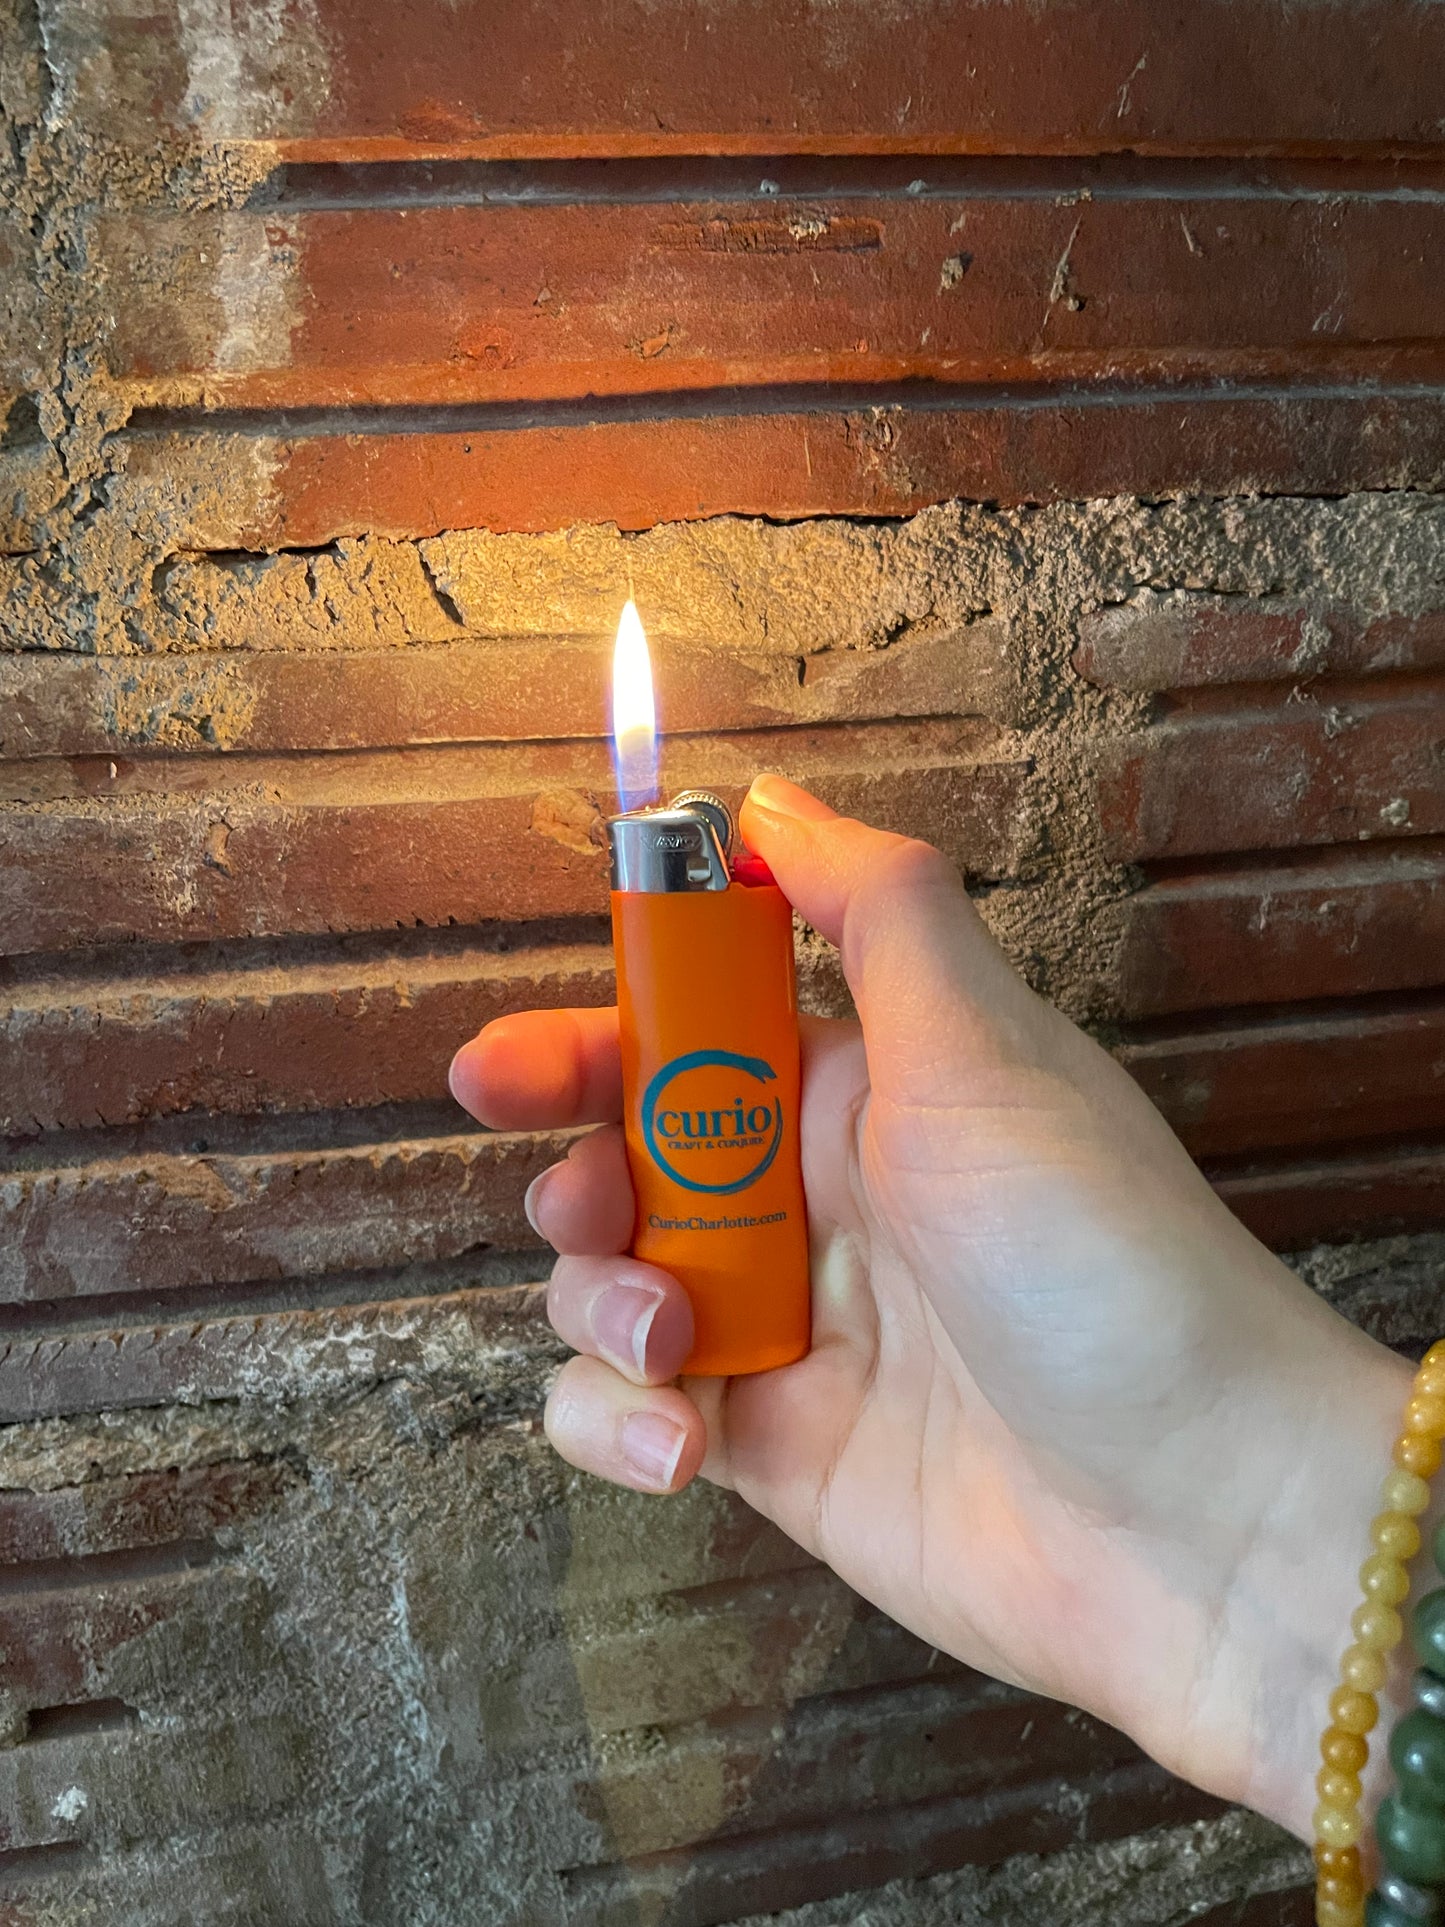 Curio Lighter